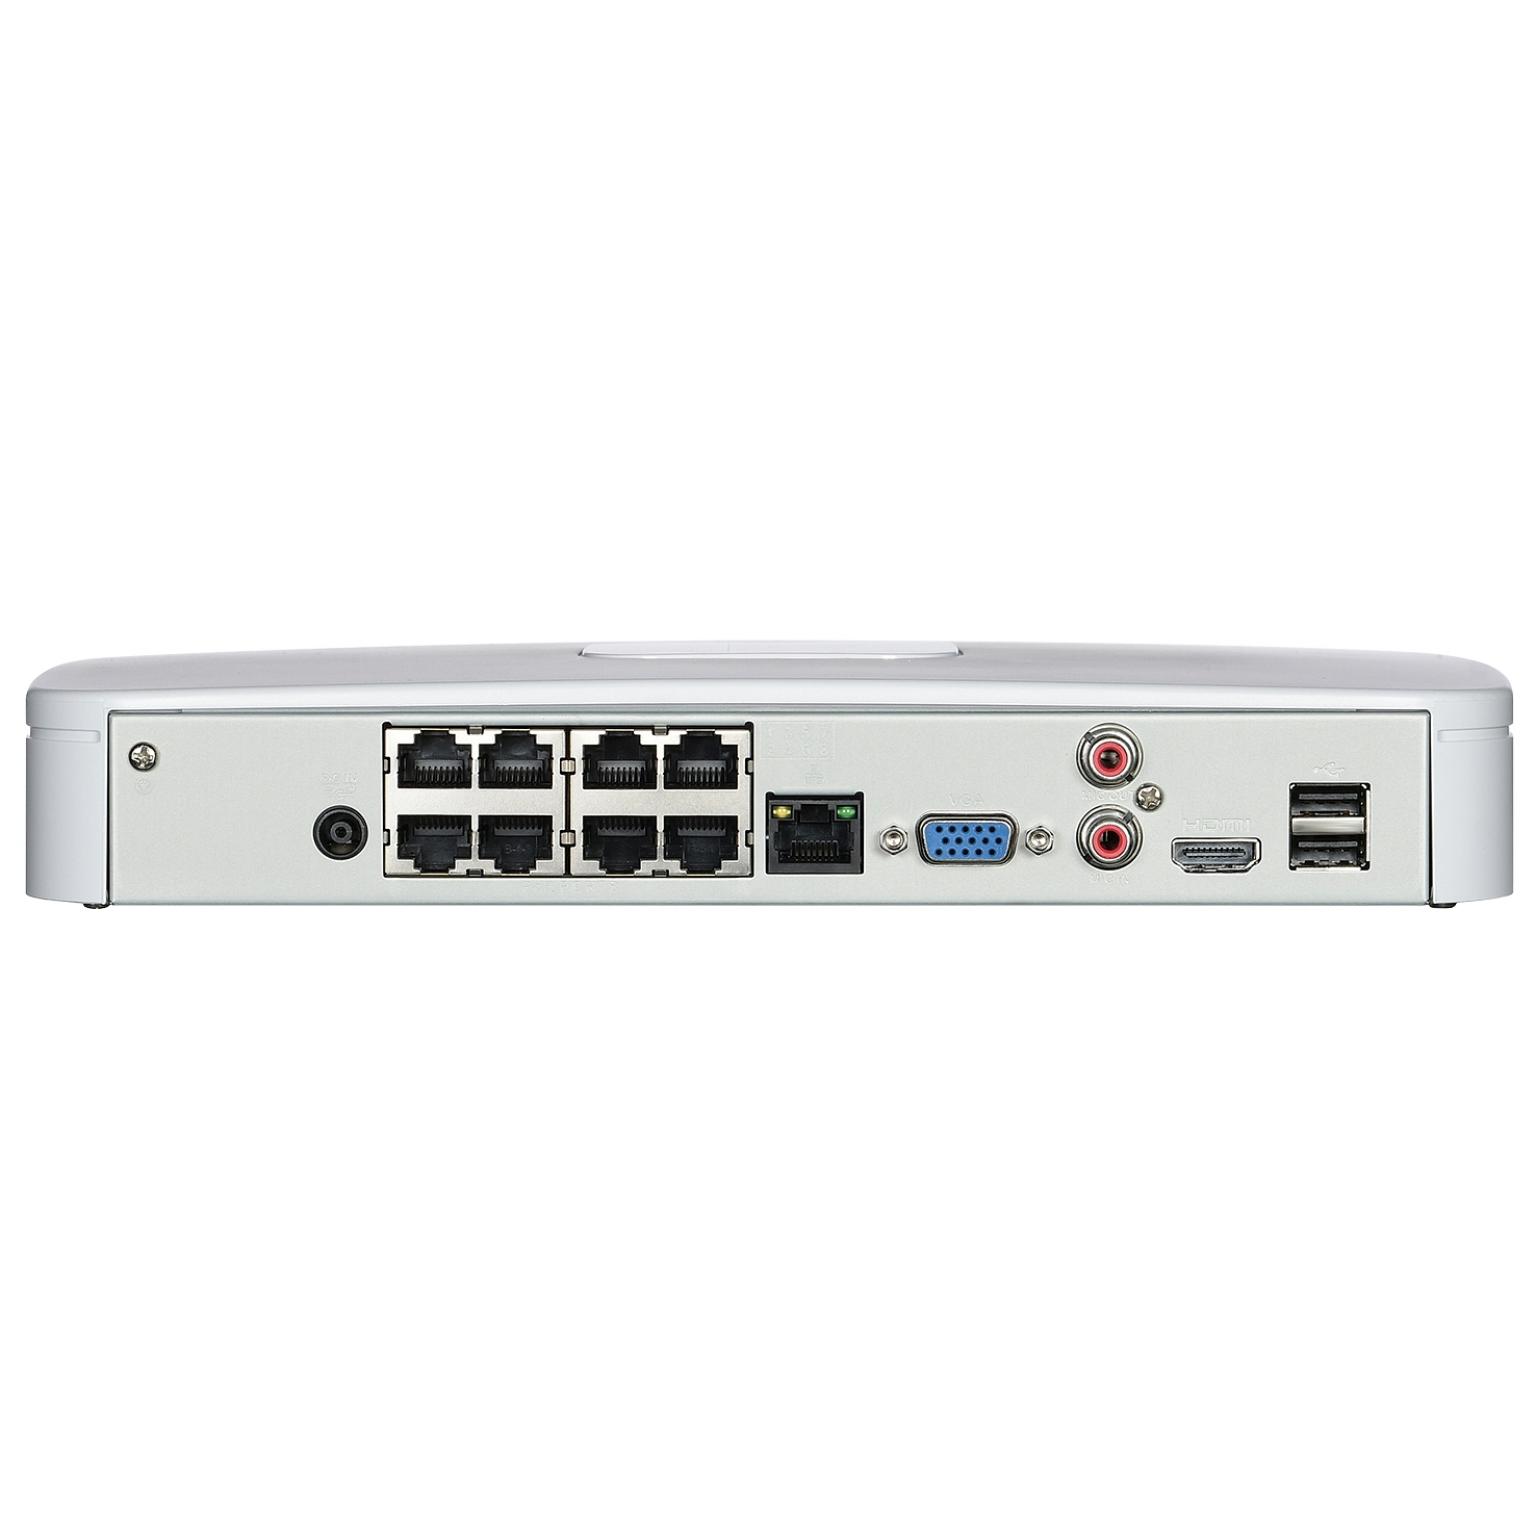 8 poe регистратор. RVI-ipn8/1-8p. RVI-1nr08120-p. RVI-1nr08120-p IP-видеорегистратор 8-канальный. Регистратор RVI 8 канальный.